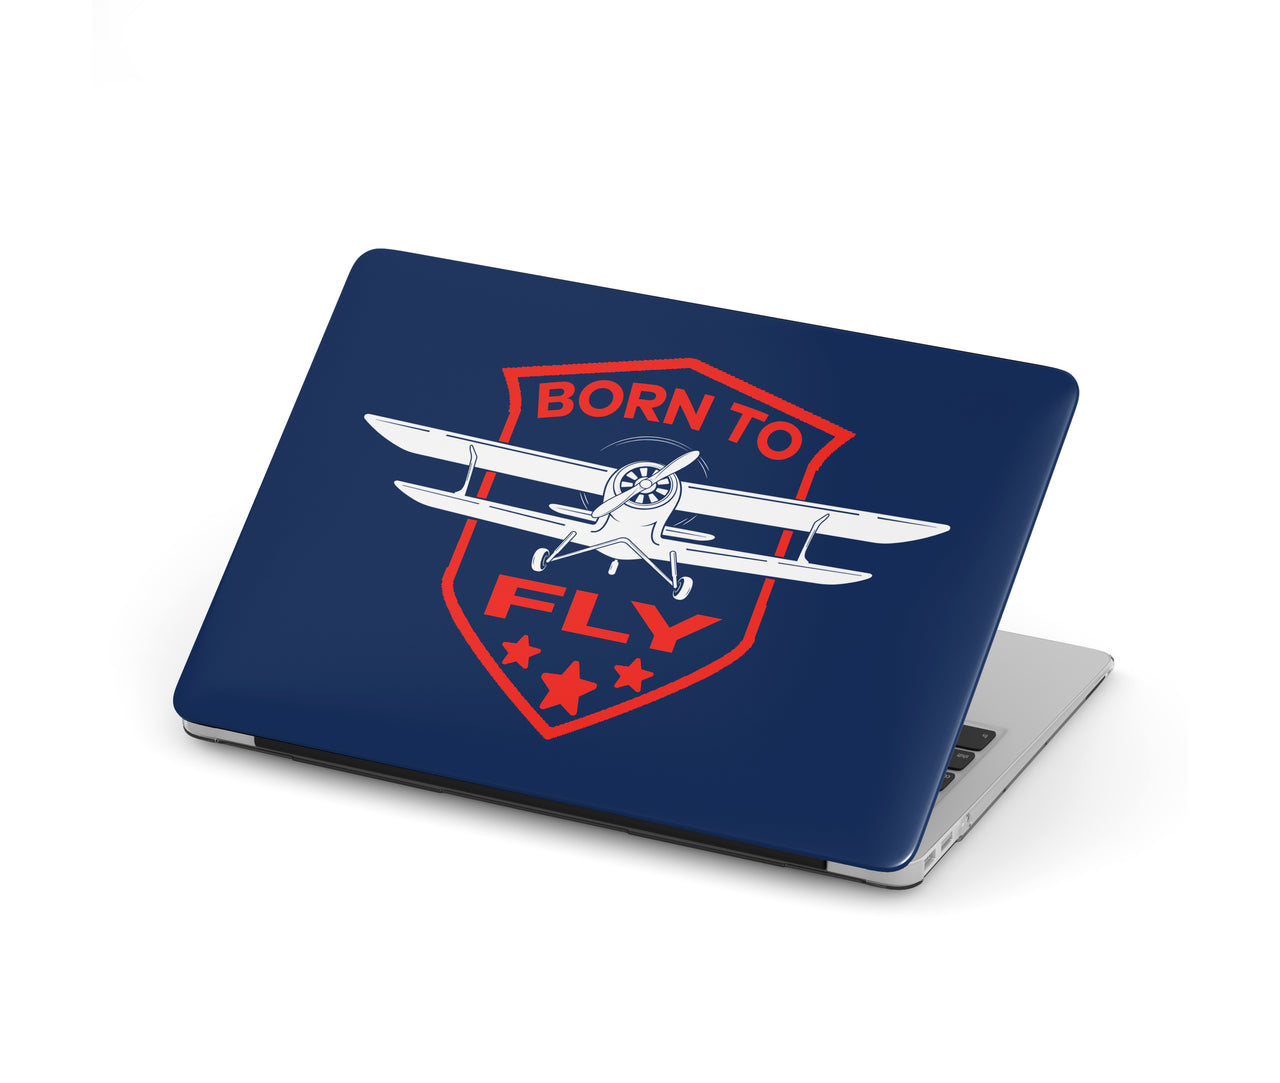 Super Born To Fly Designed Macbook Cases